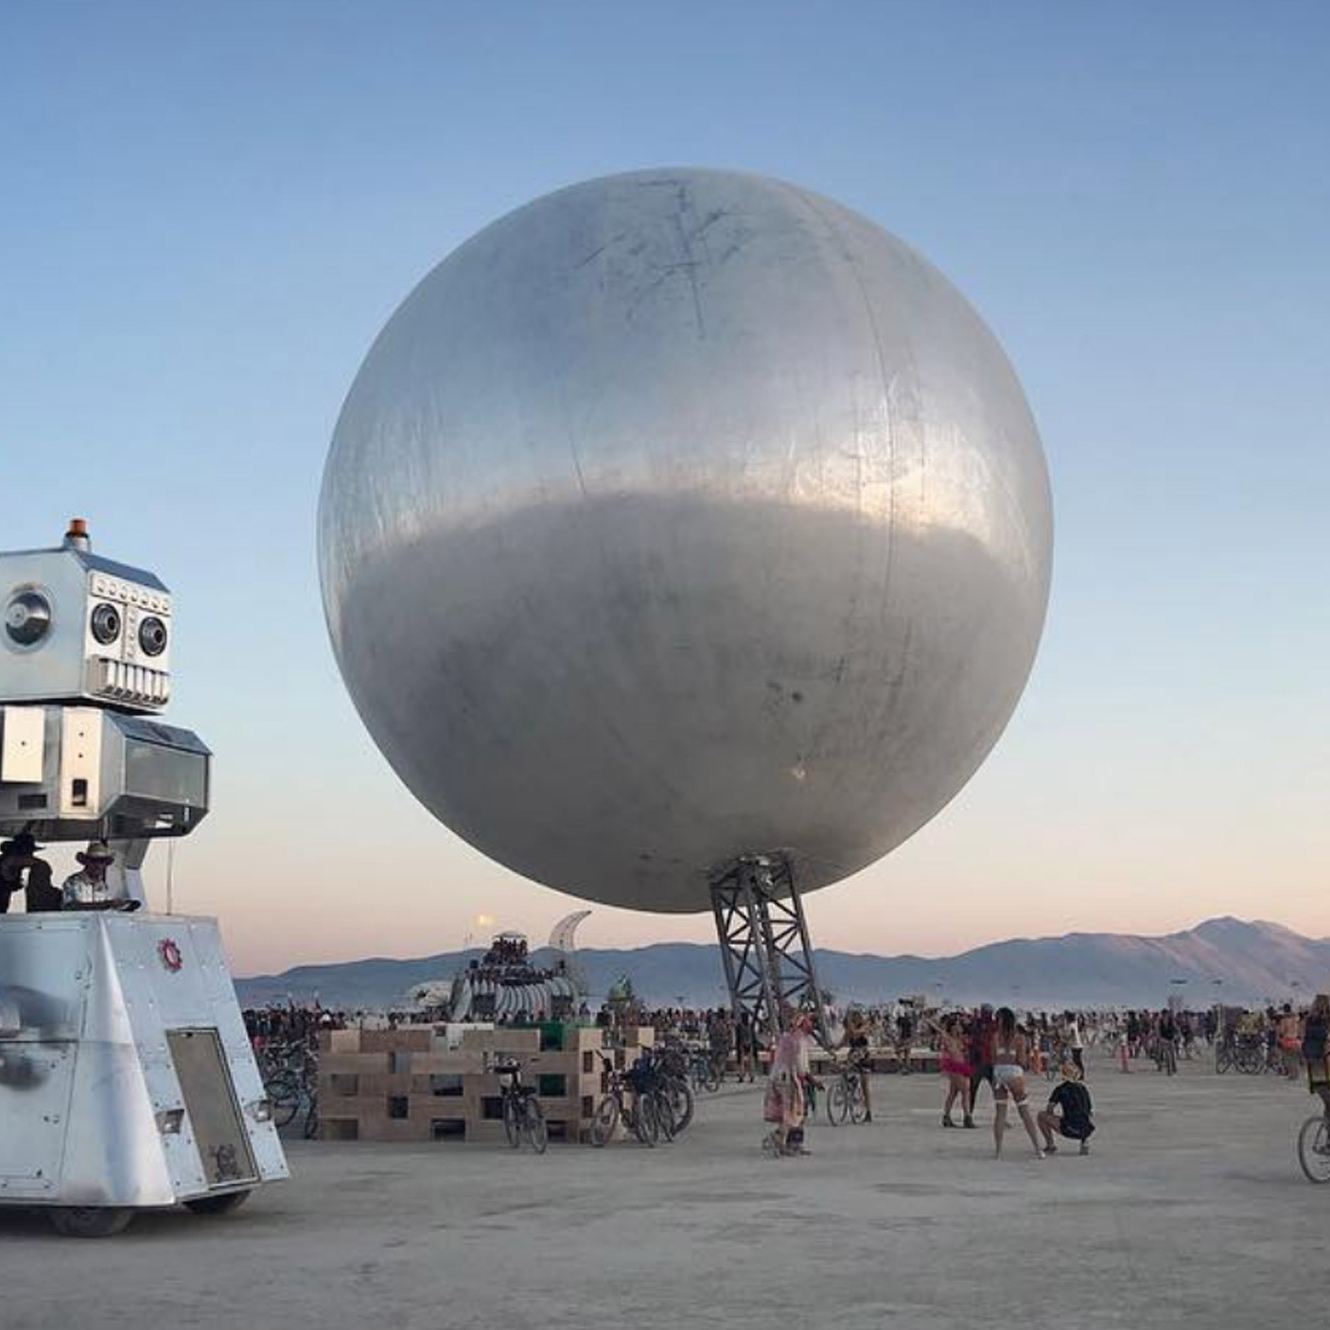 Spherical architecture: Burning Man sphere, by Bjarke Ingels and Jakob Lange